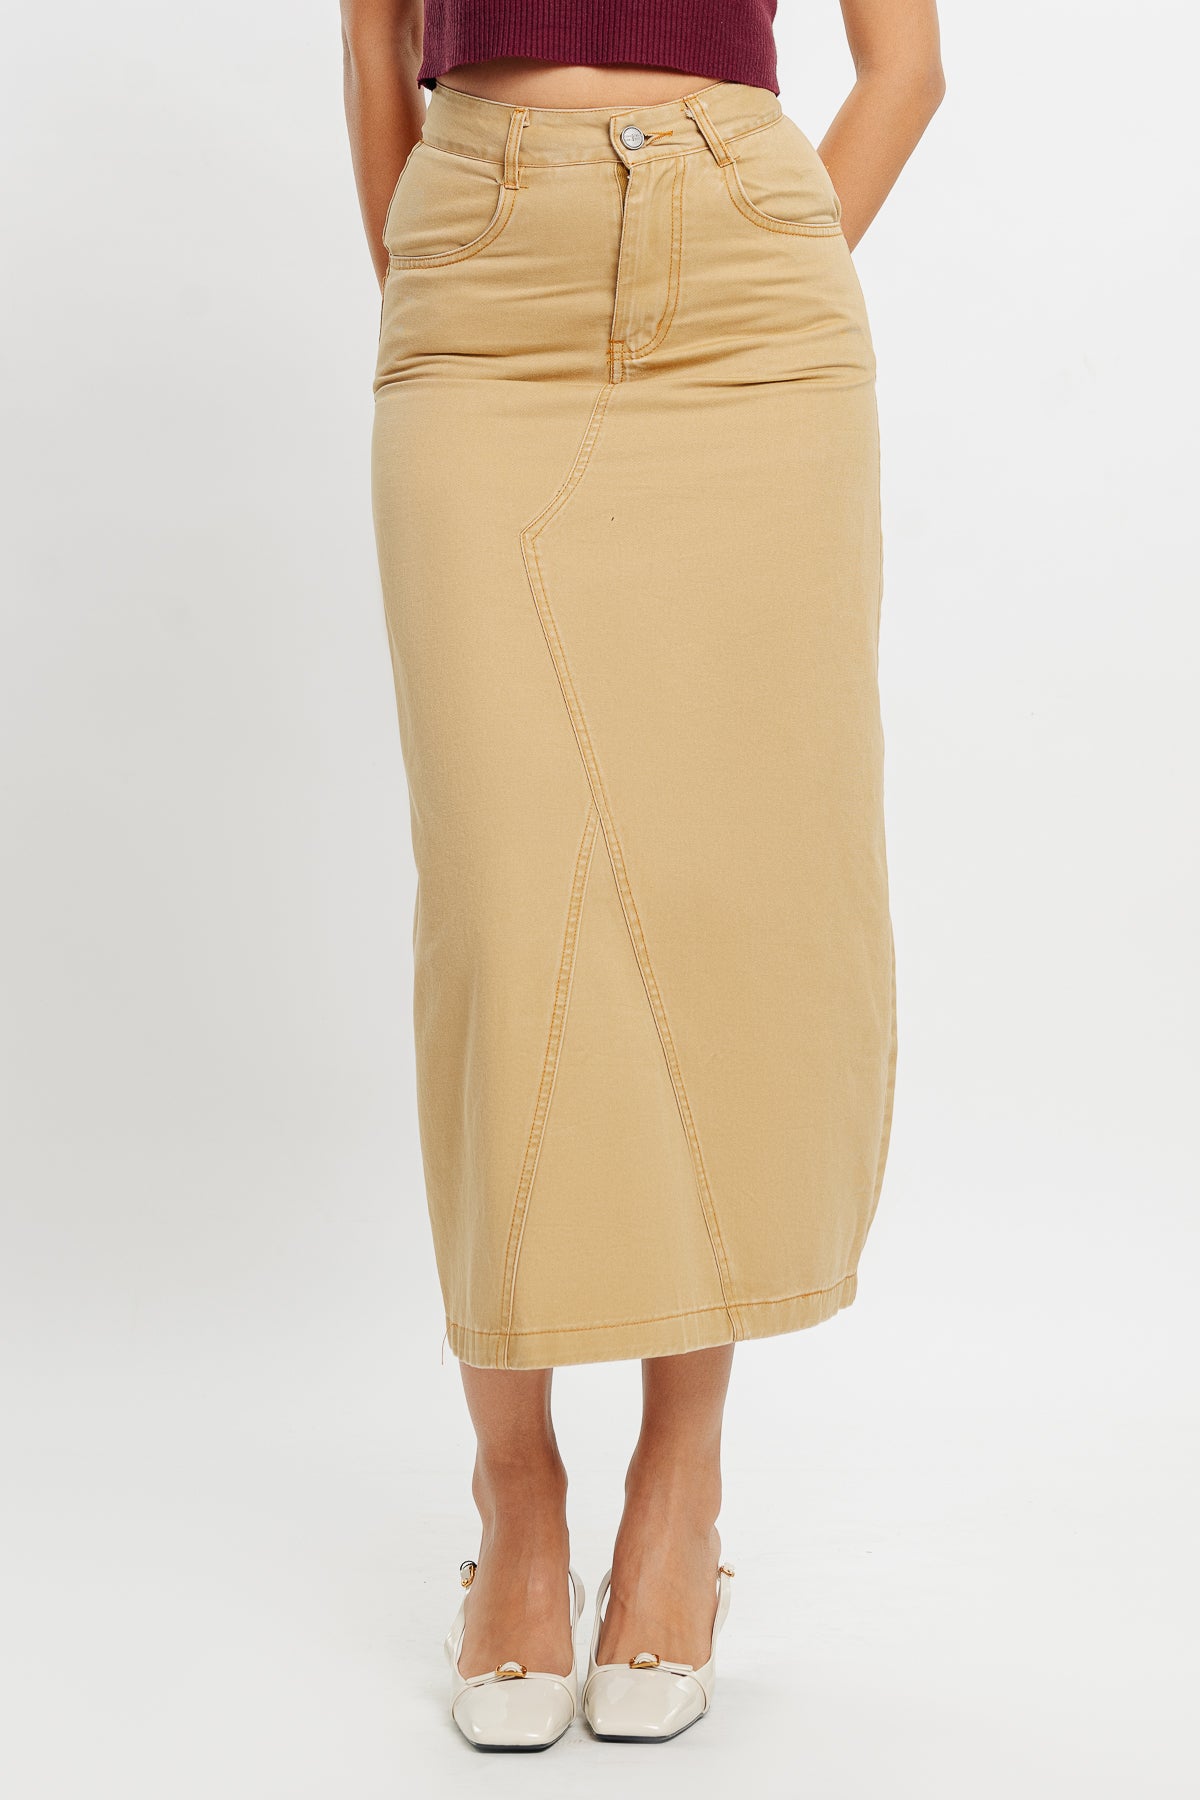 JNGSA Denim Mini Skirt Mini Skirt With Slit Women Autumn Winter